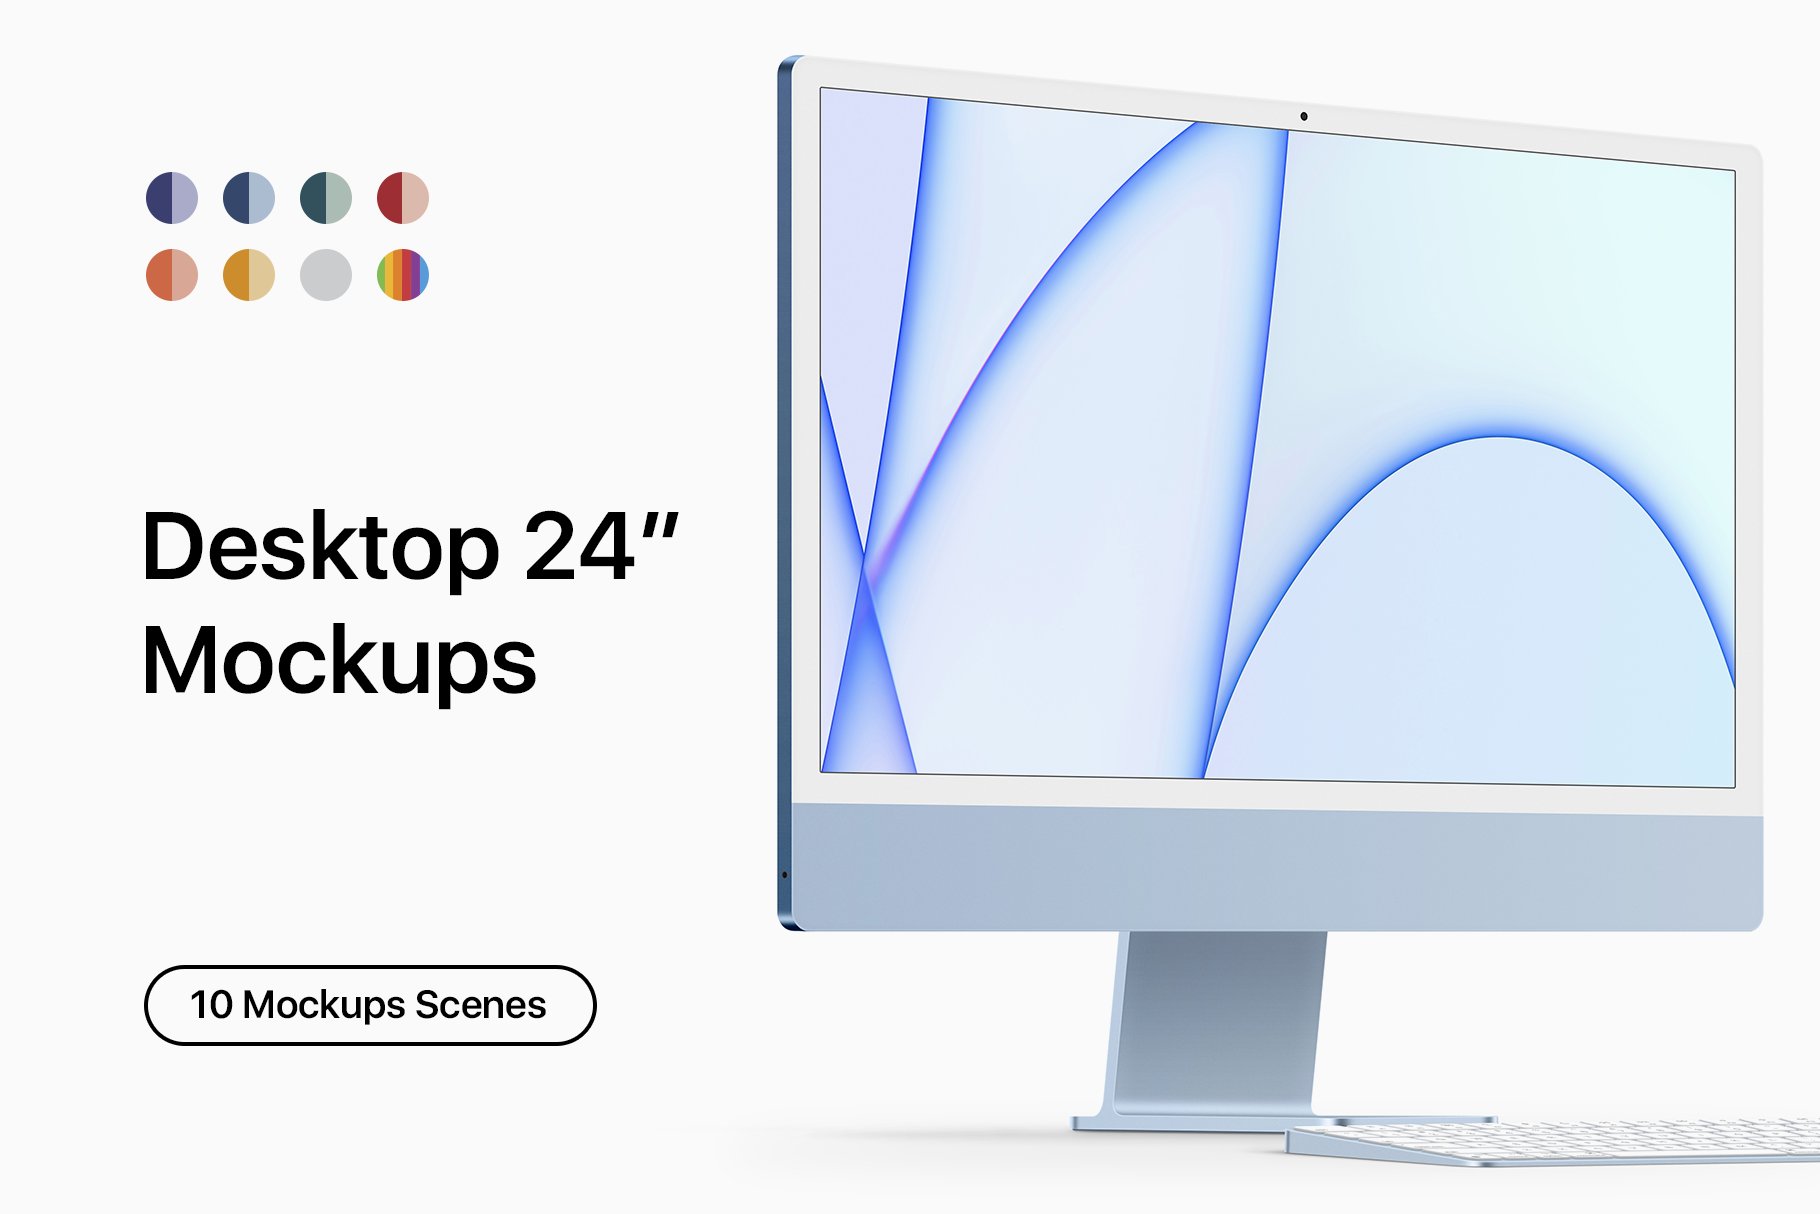 Desktop 24" - 10 Mockups Scenes cover image.